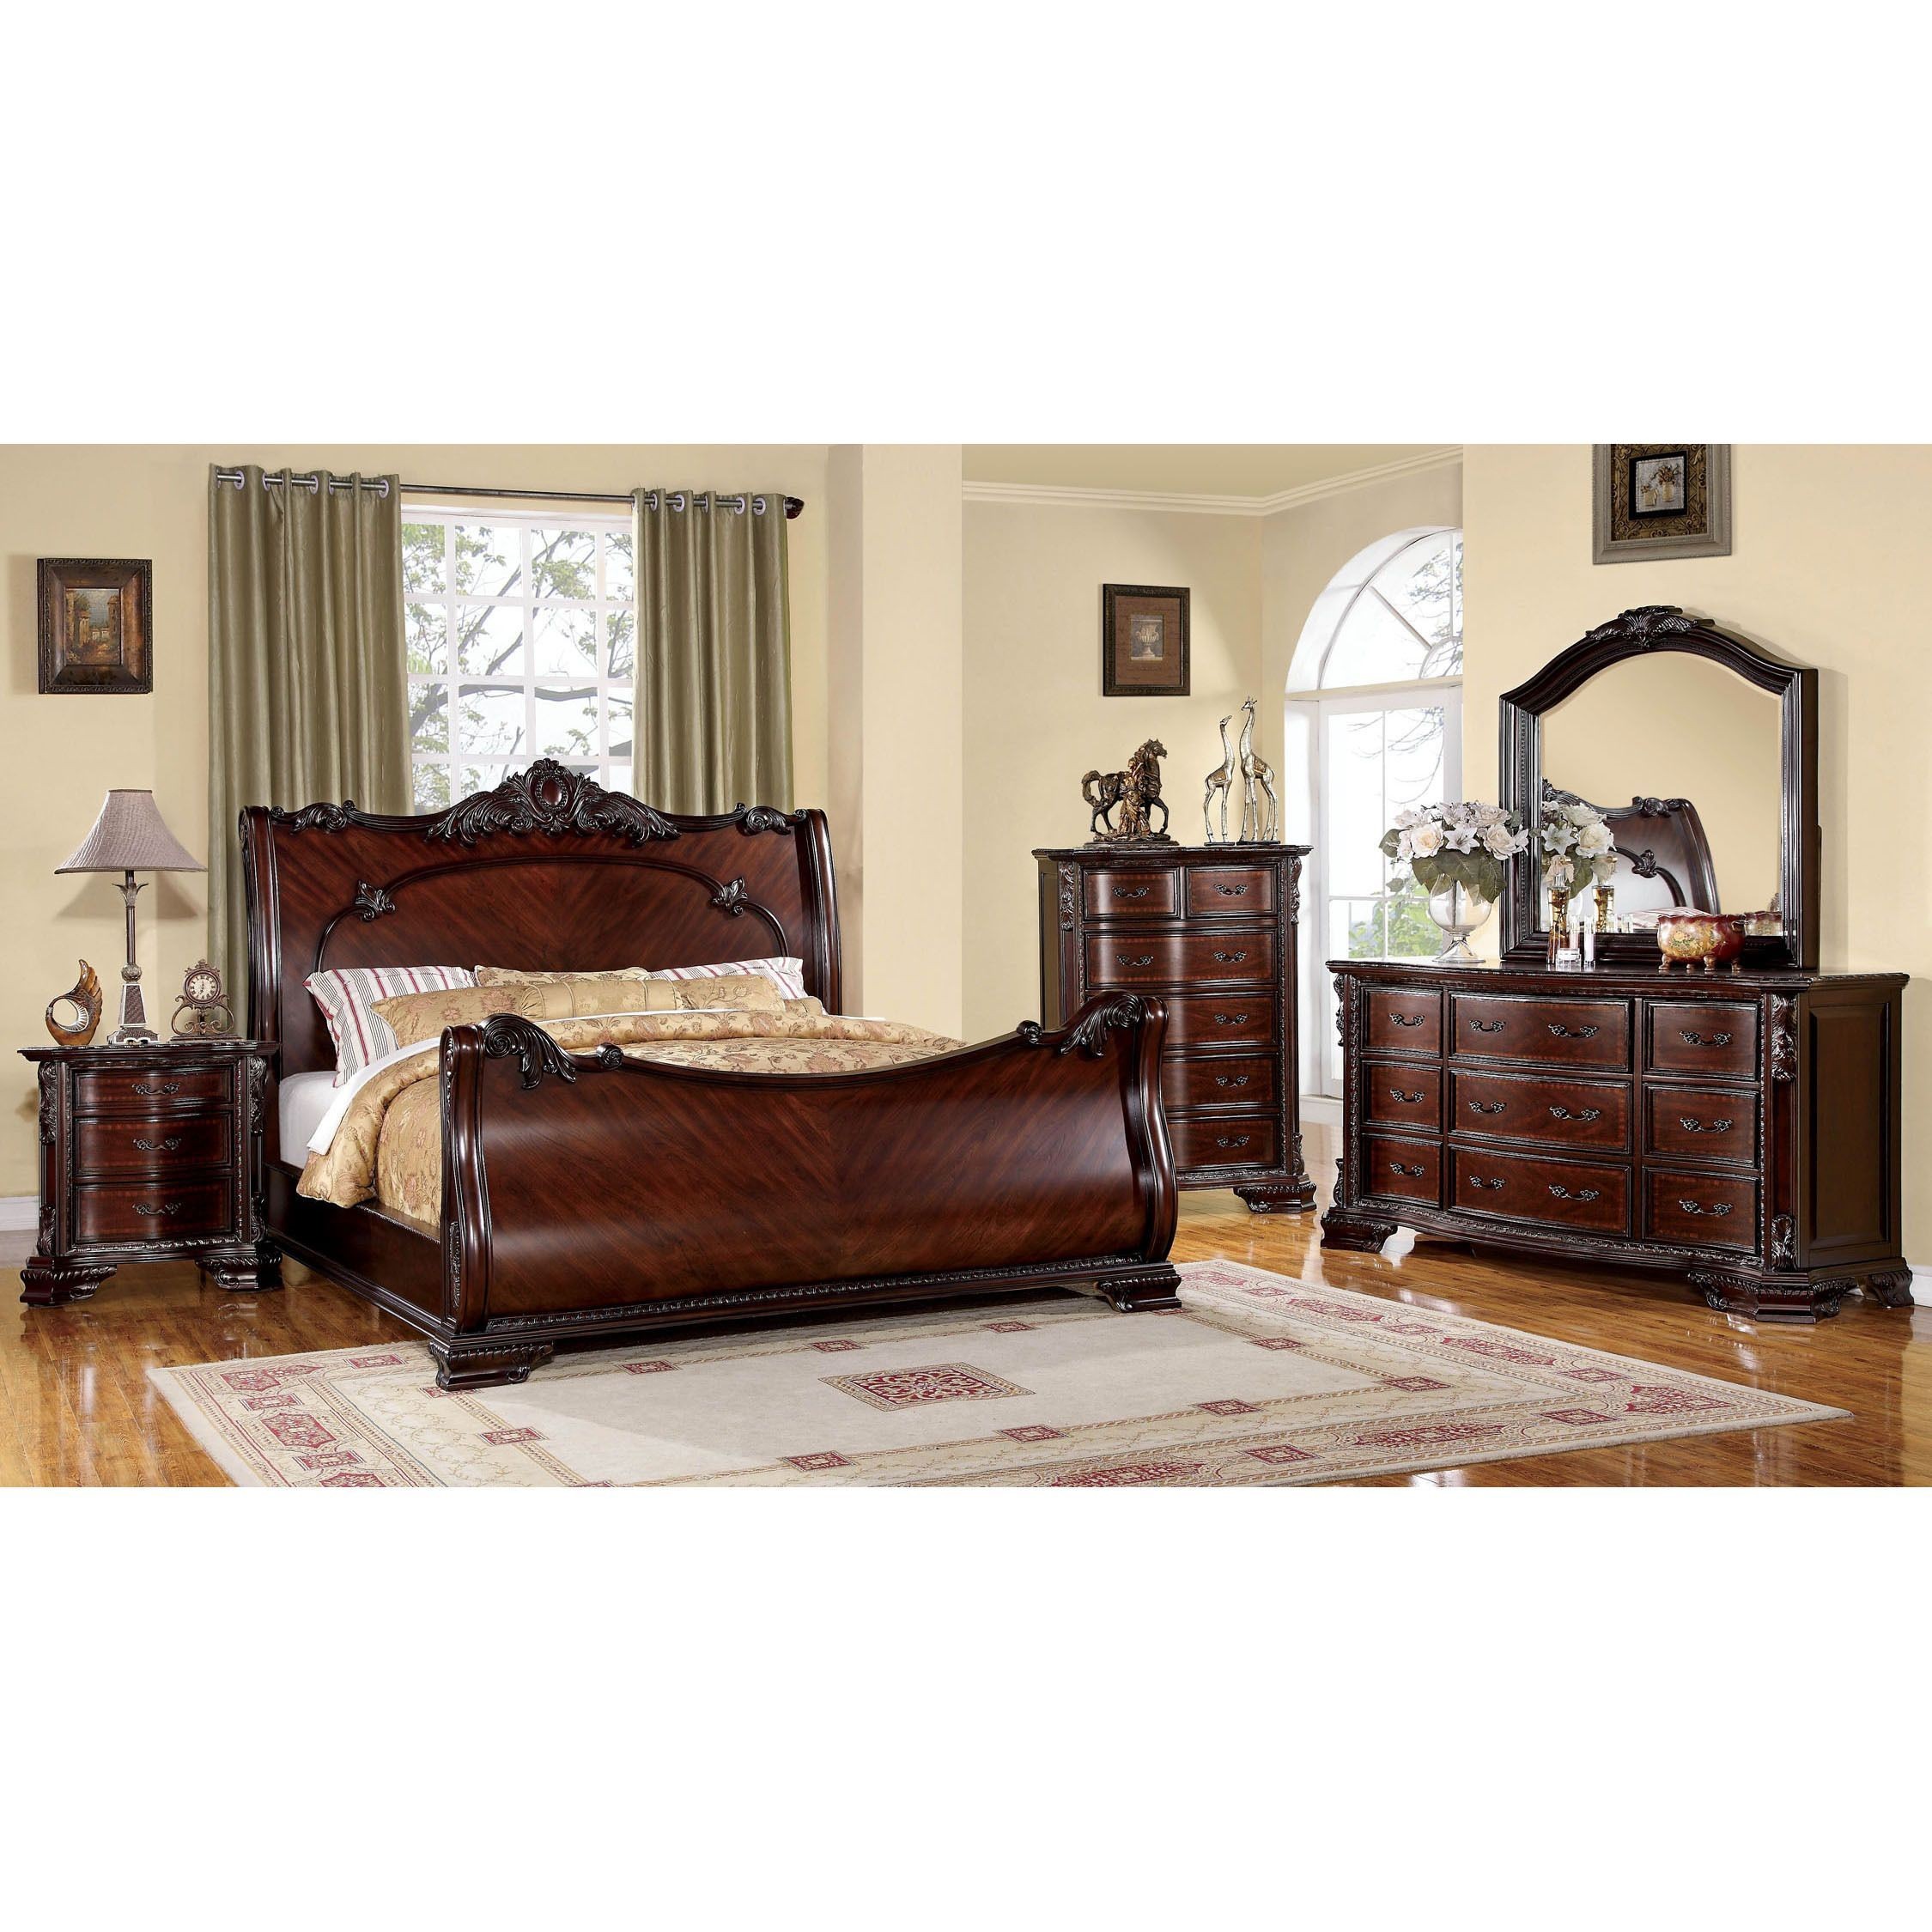 Of america luxury brown cherry 4 piece baroque style bedroom